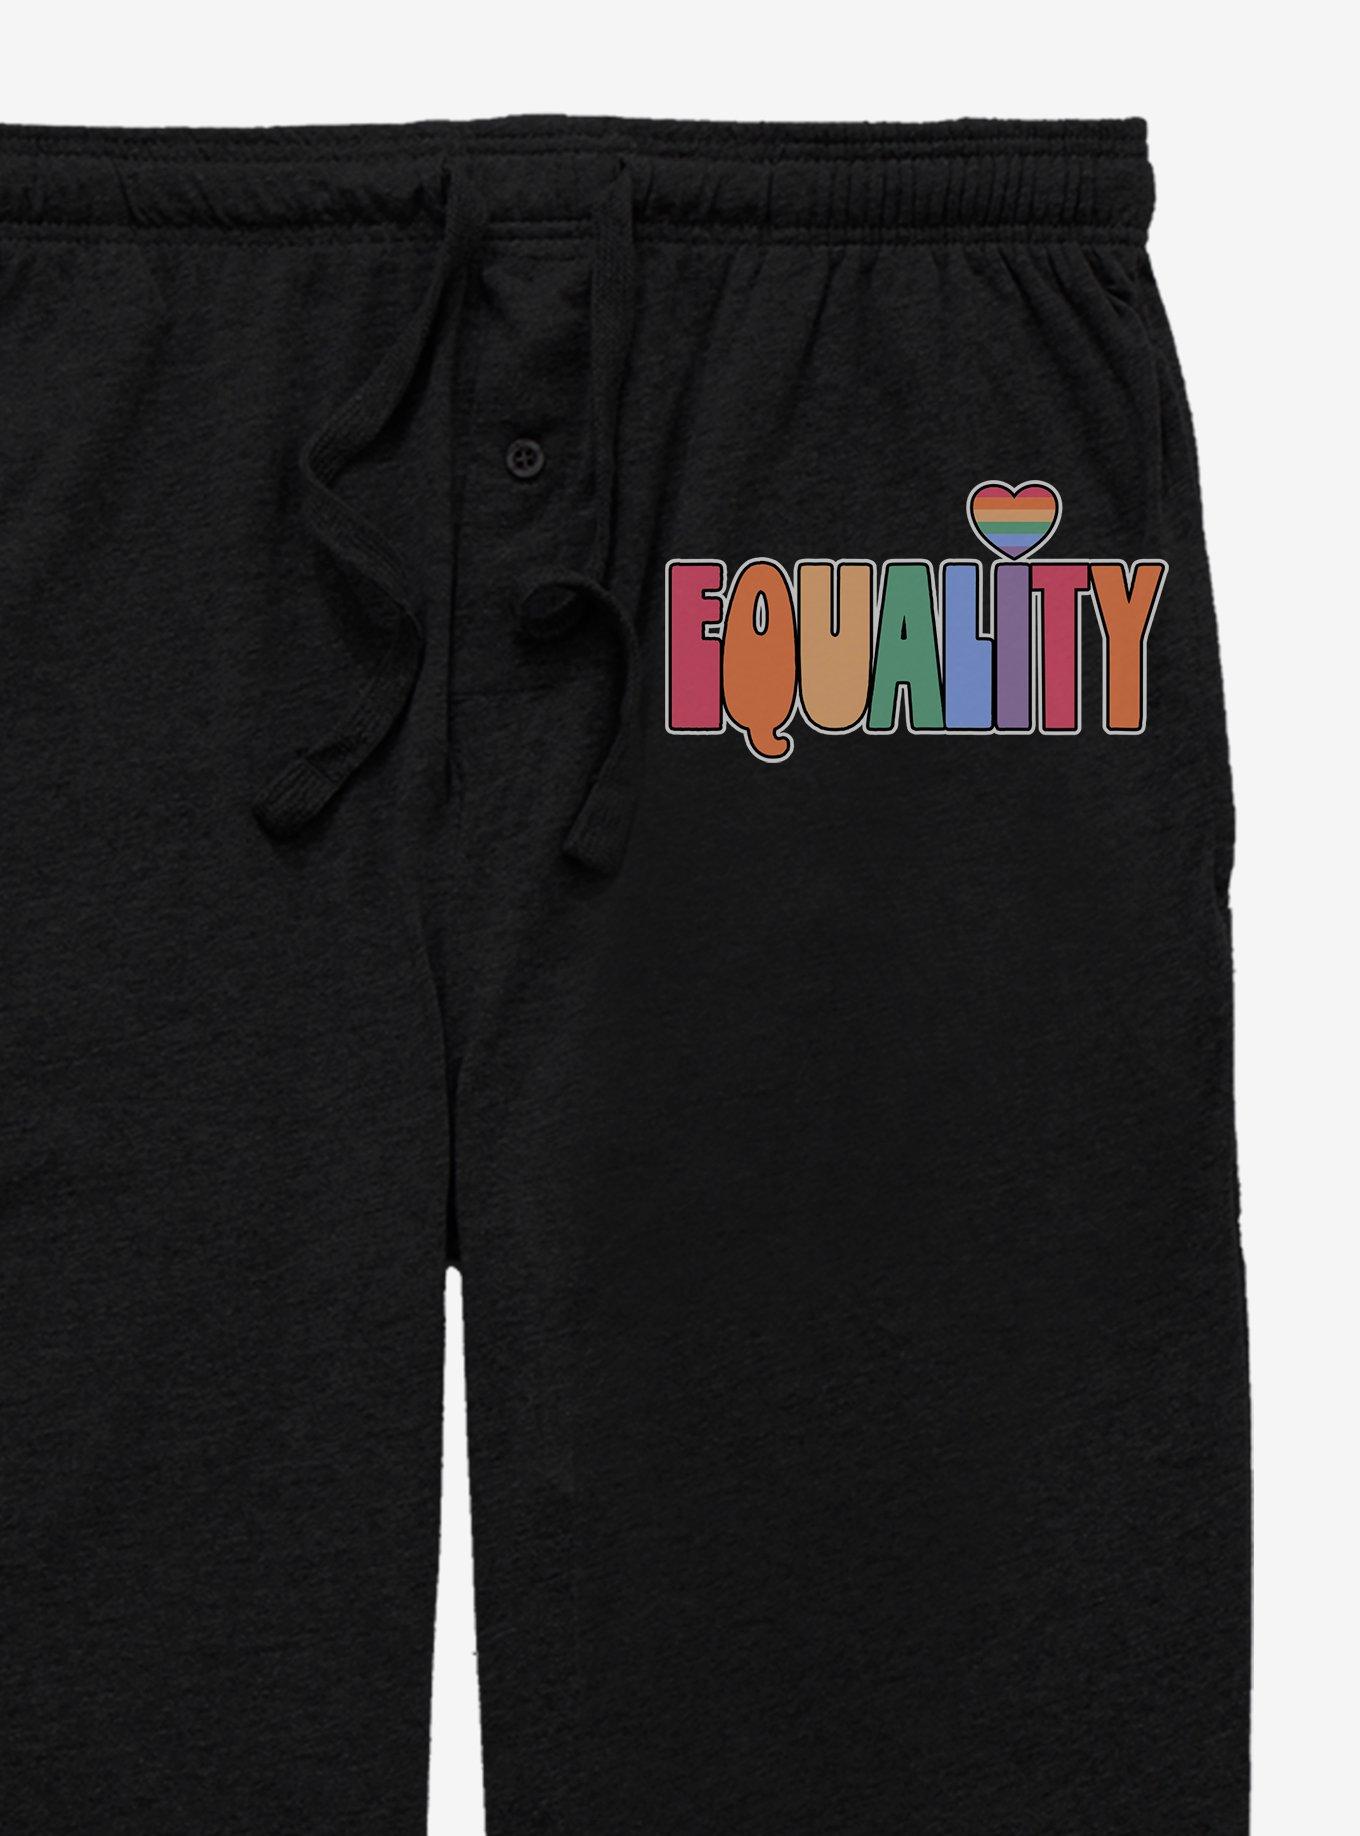 Equality Heart Pajama Pants, BLACK, alternate